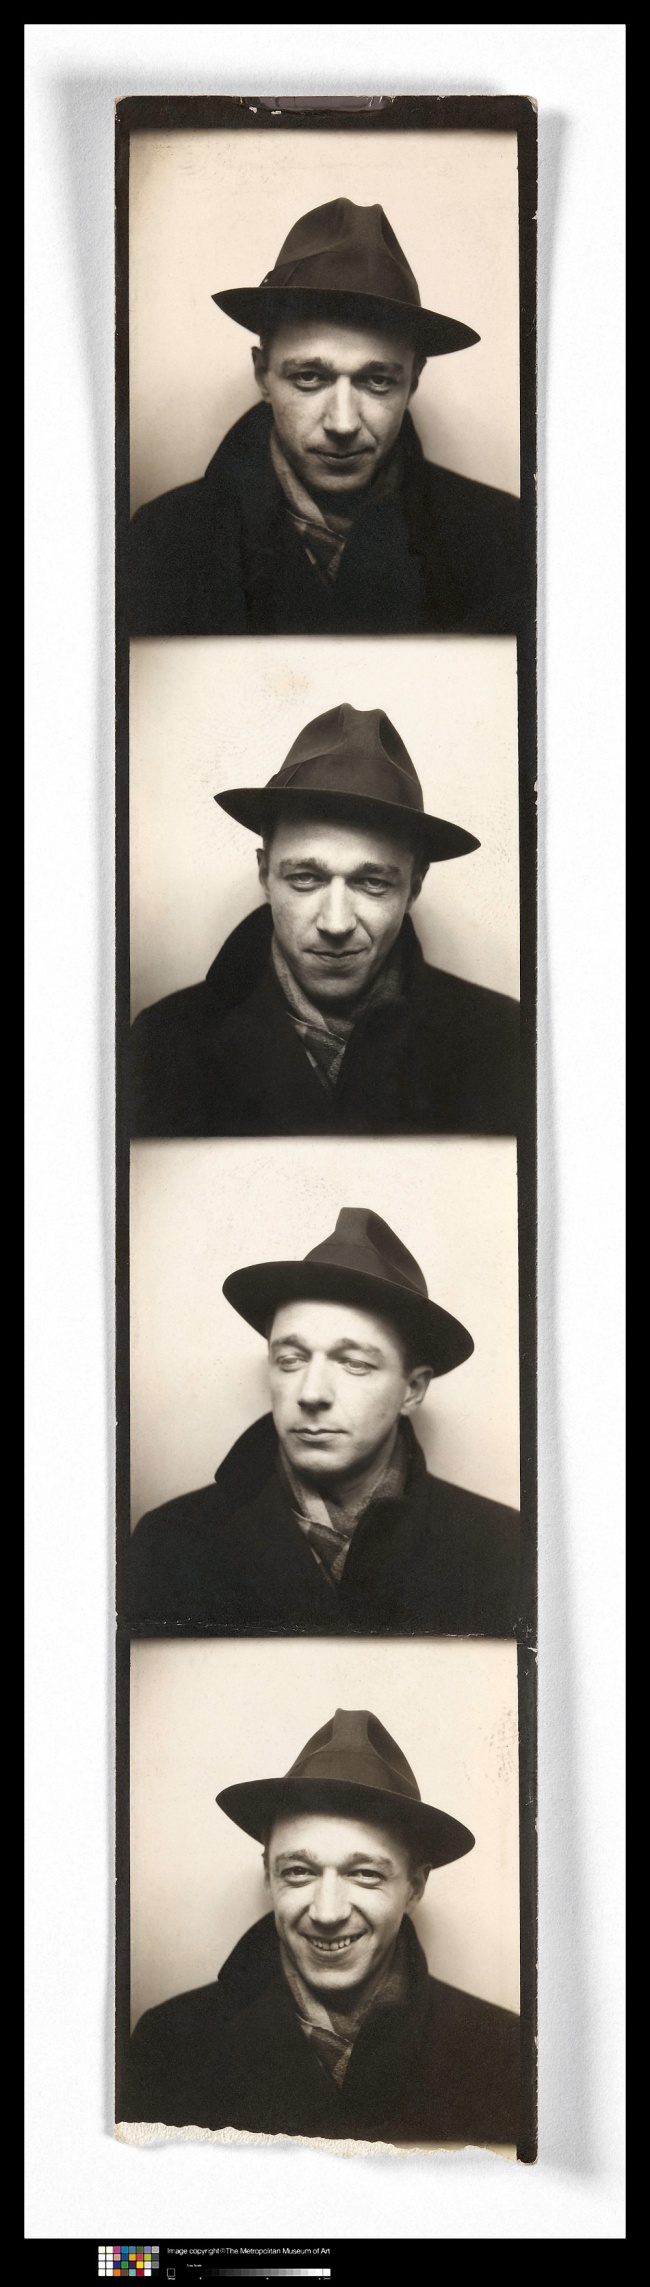 Walker Evans (American, 1903-1975) 'Self-Portrait in Automated Photobooth' 1930